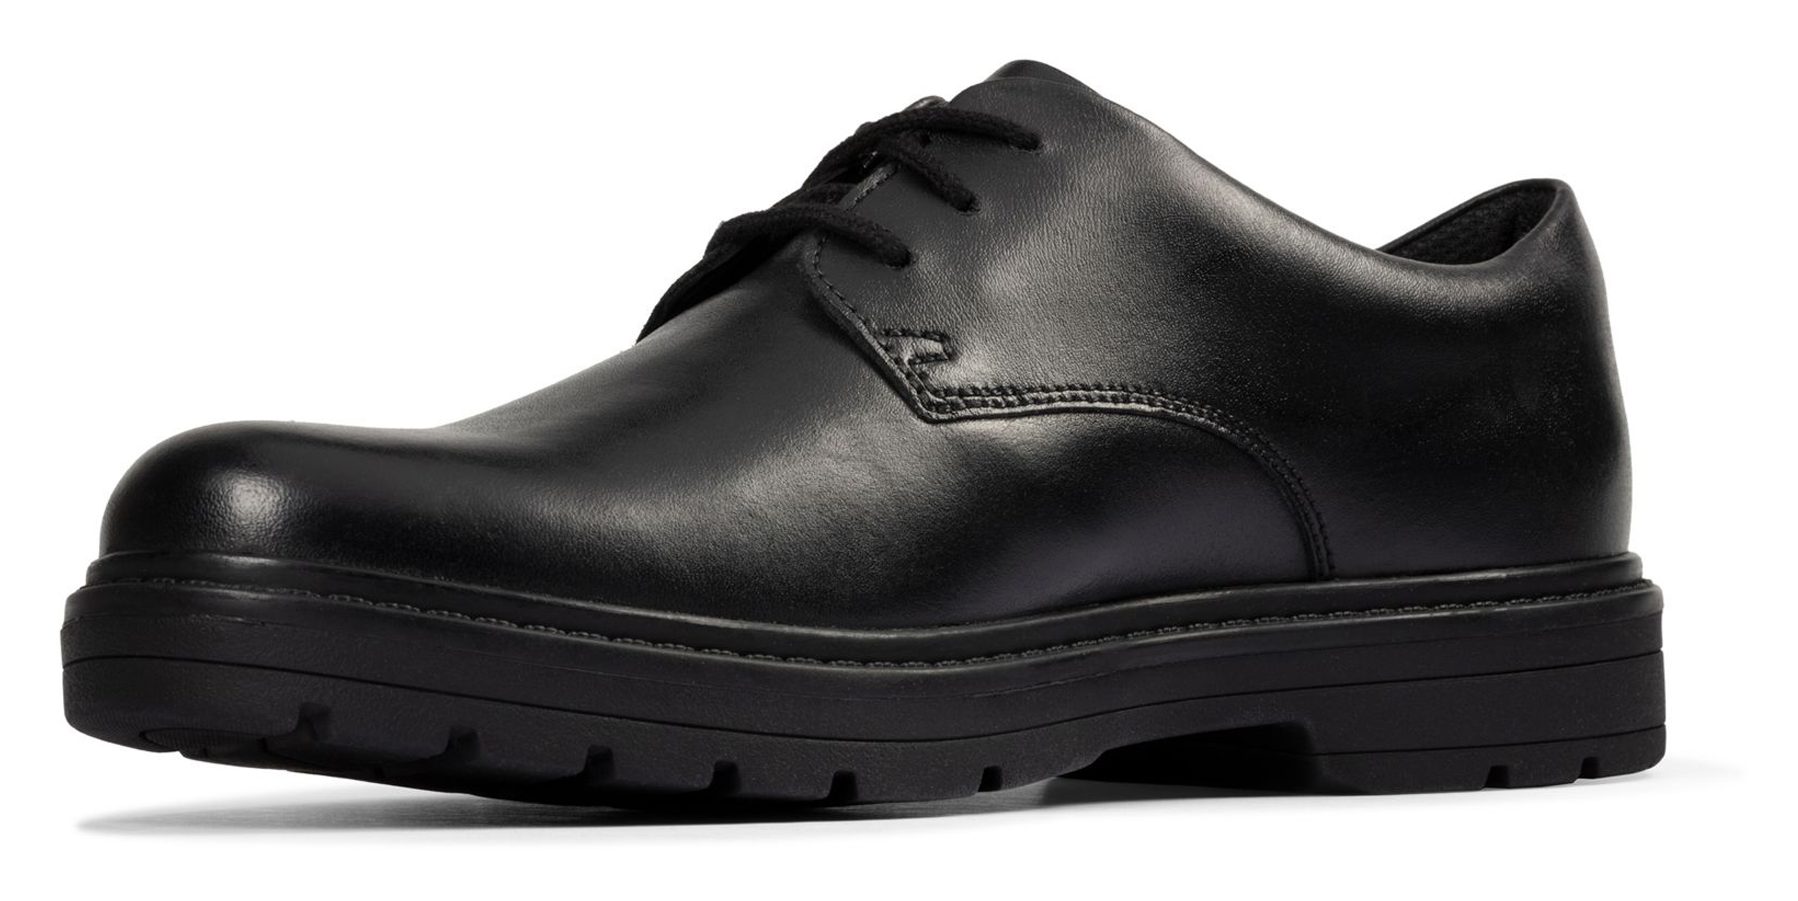 Clarks Loxham Derby Youth Black Leather 26151593 - Boys School Shoes ...